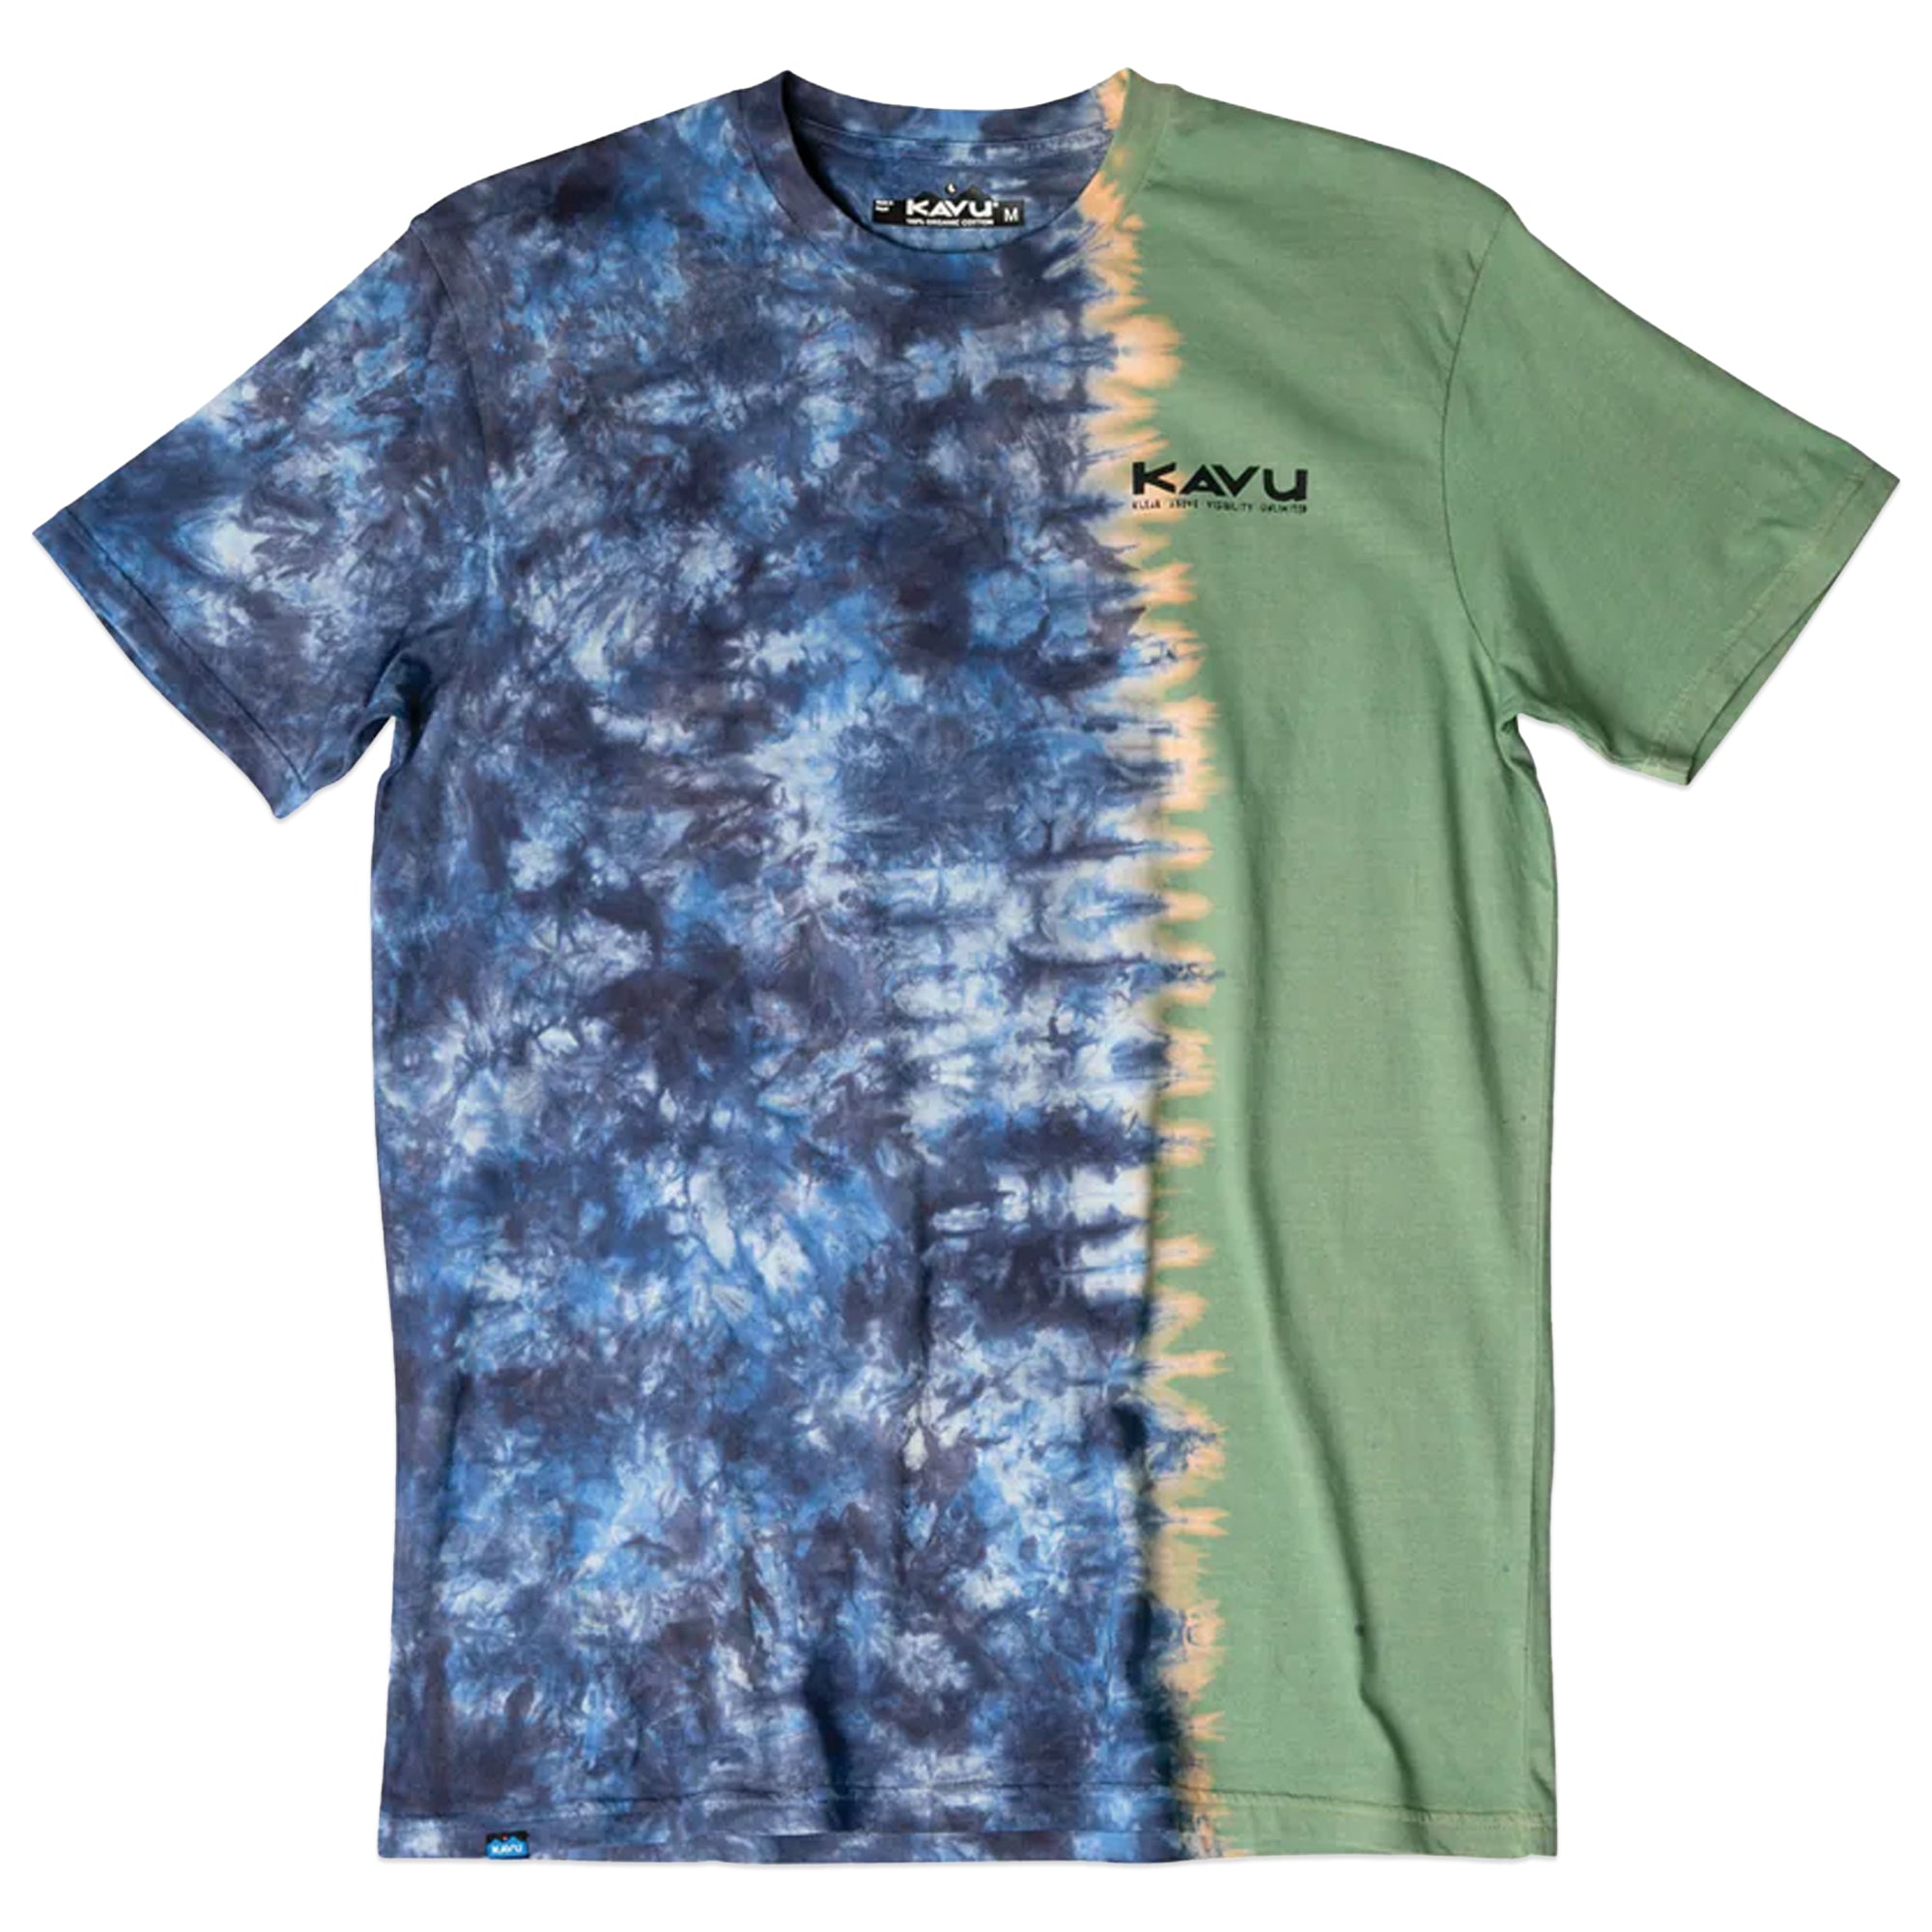 KAVU Klear Above Etch Art T-Shirt - Stormy Seas